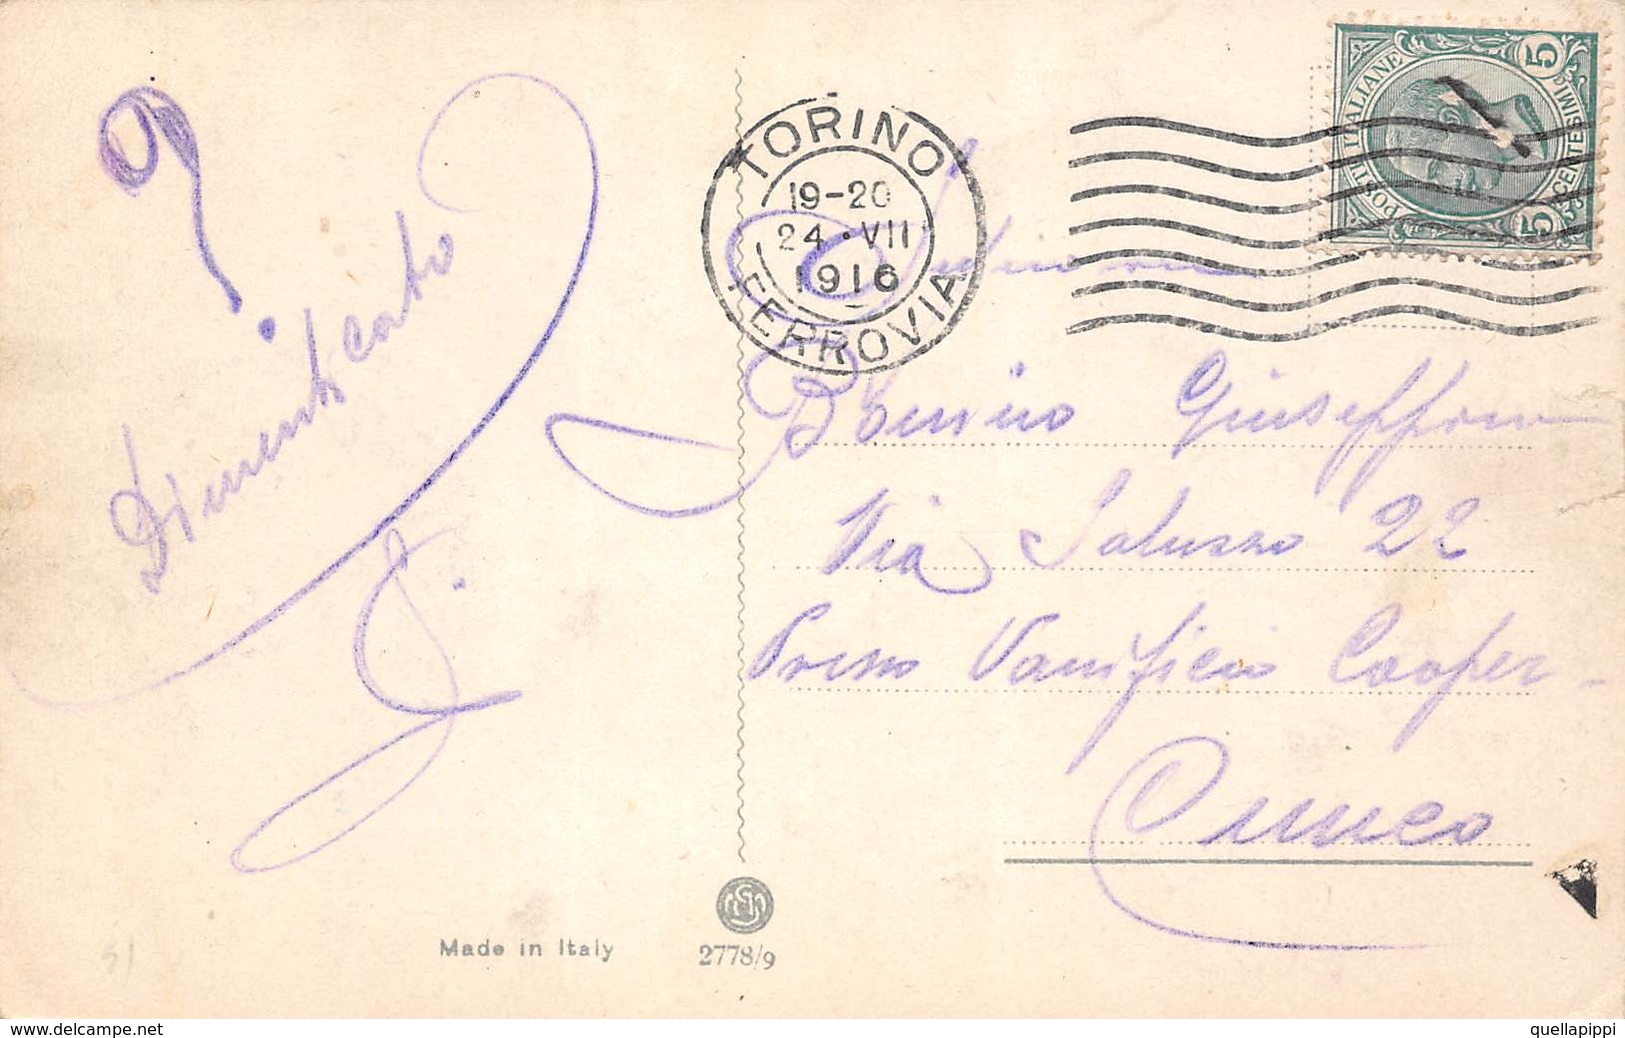 08792 "TORINO - MONUMENTO FREJUS" ANIMATA, TRAMWAY NR. 10. CART SPED 1916 - Places & Squares